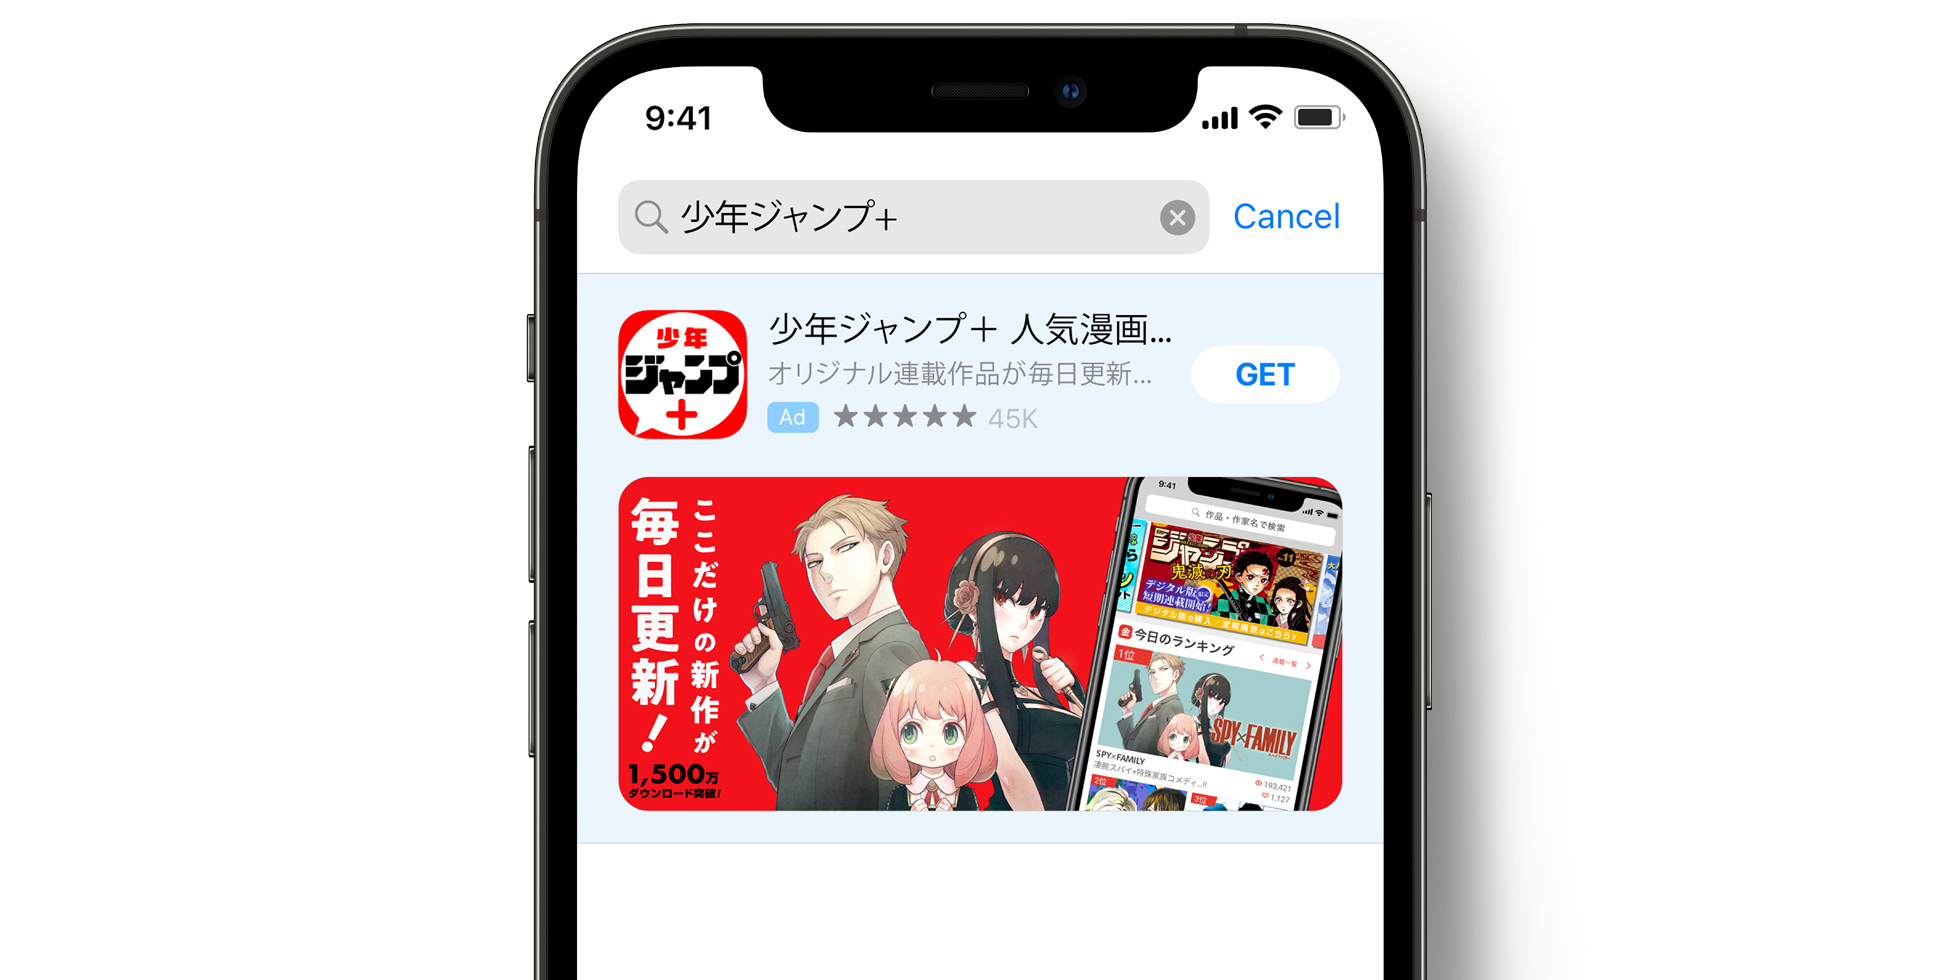 App Store의 Shonen Jump+ 광고